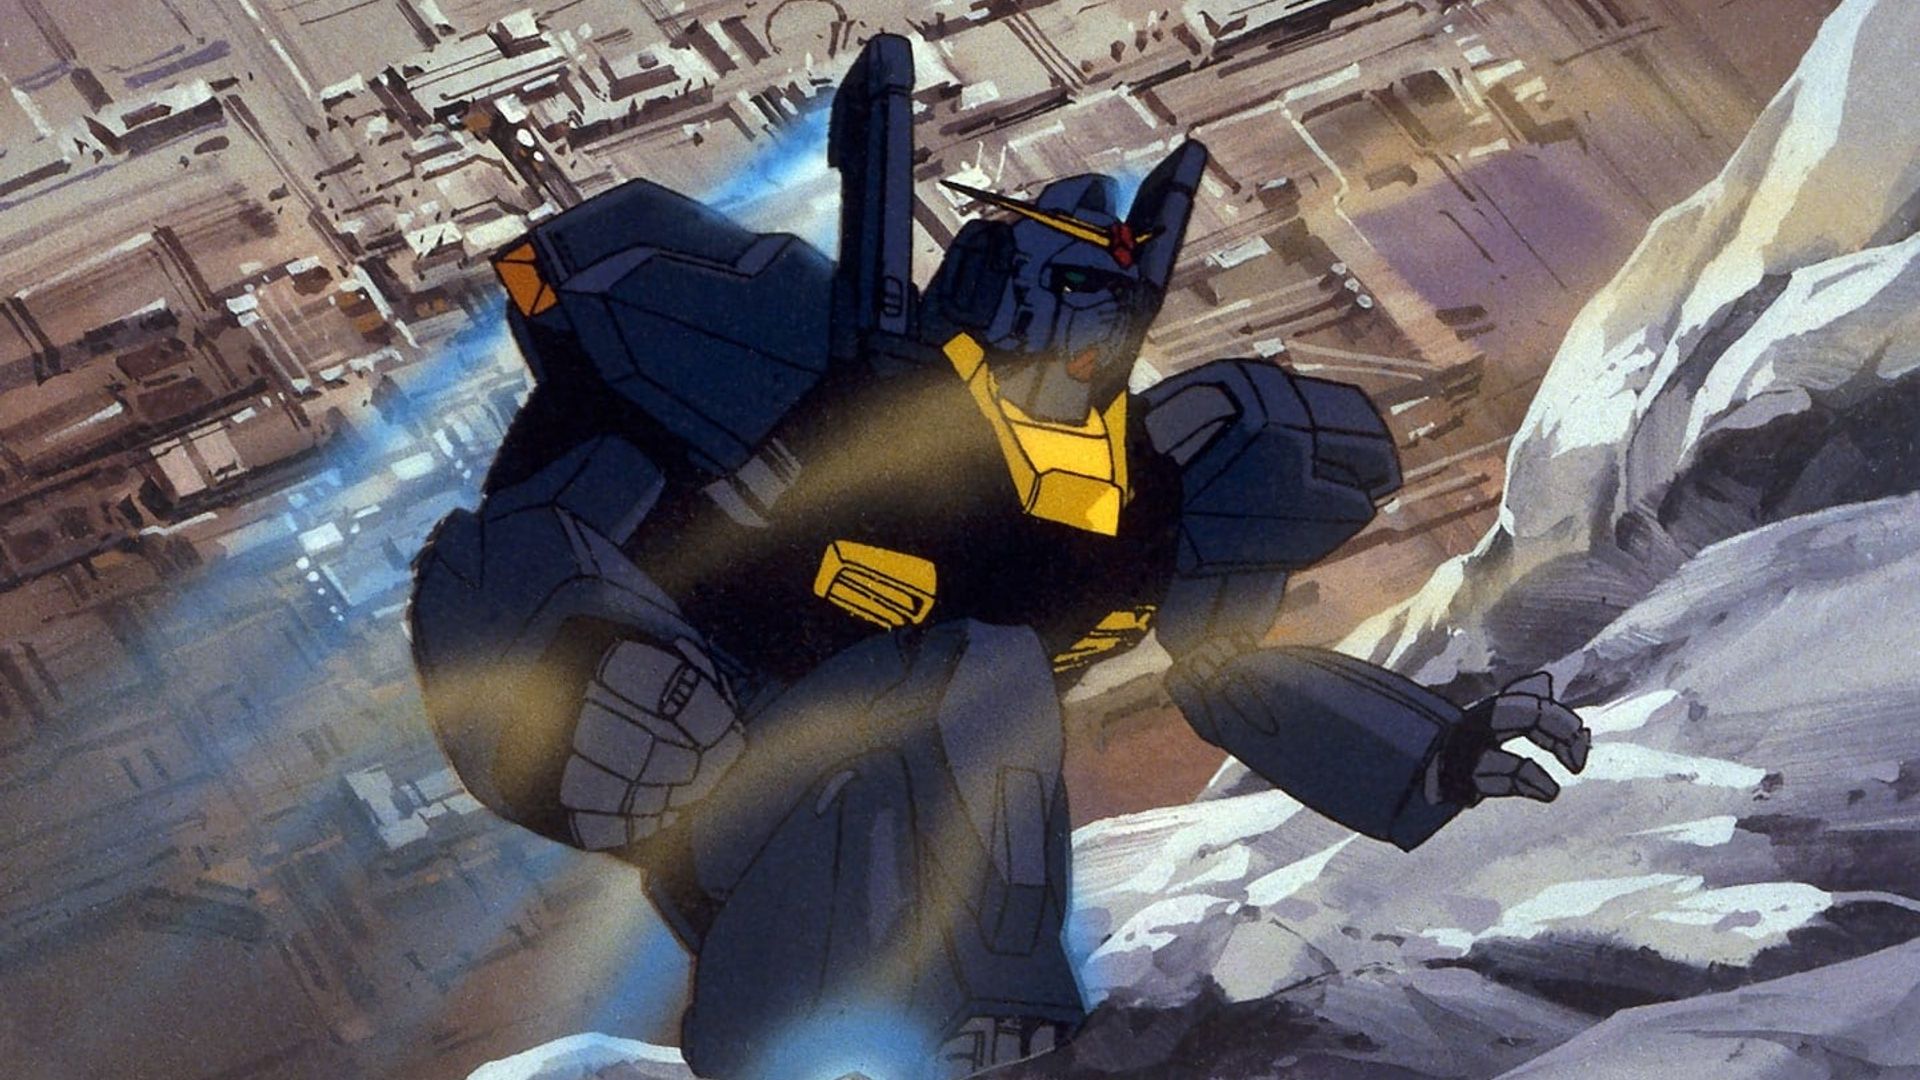 Mobile Suit Zeta Gundam background